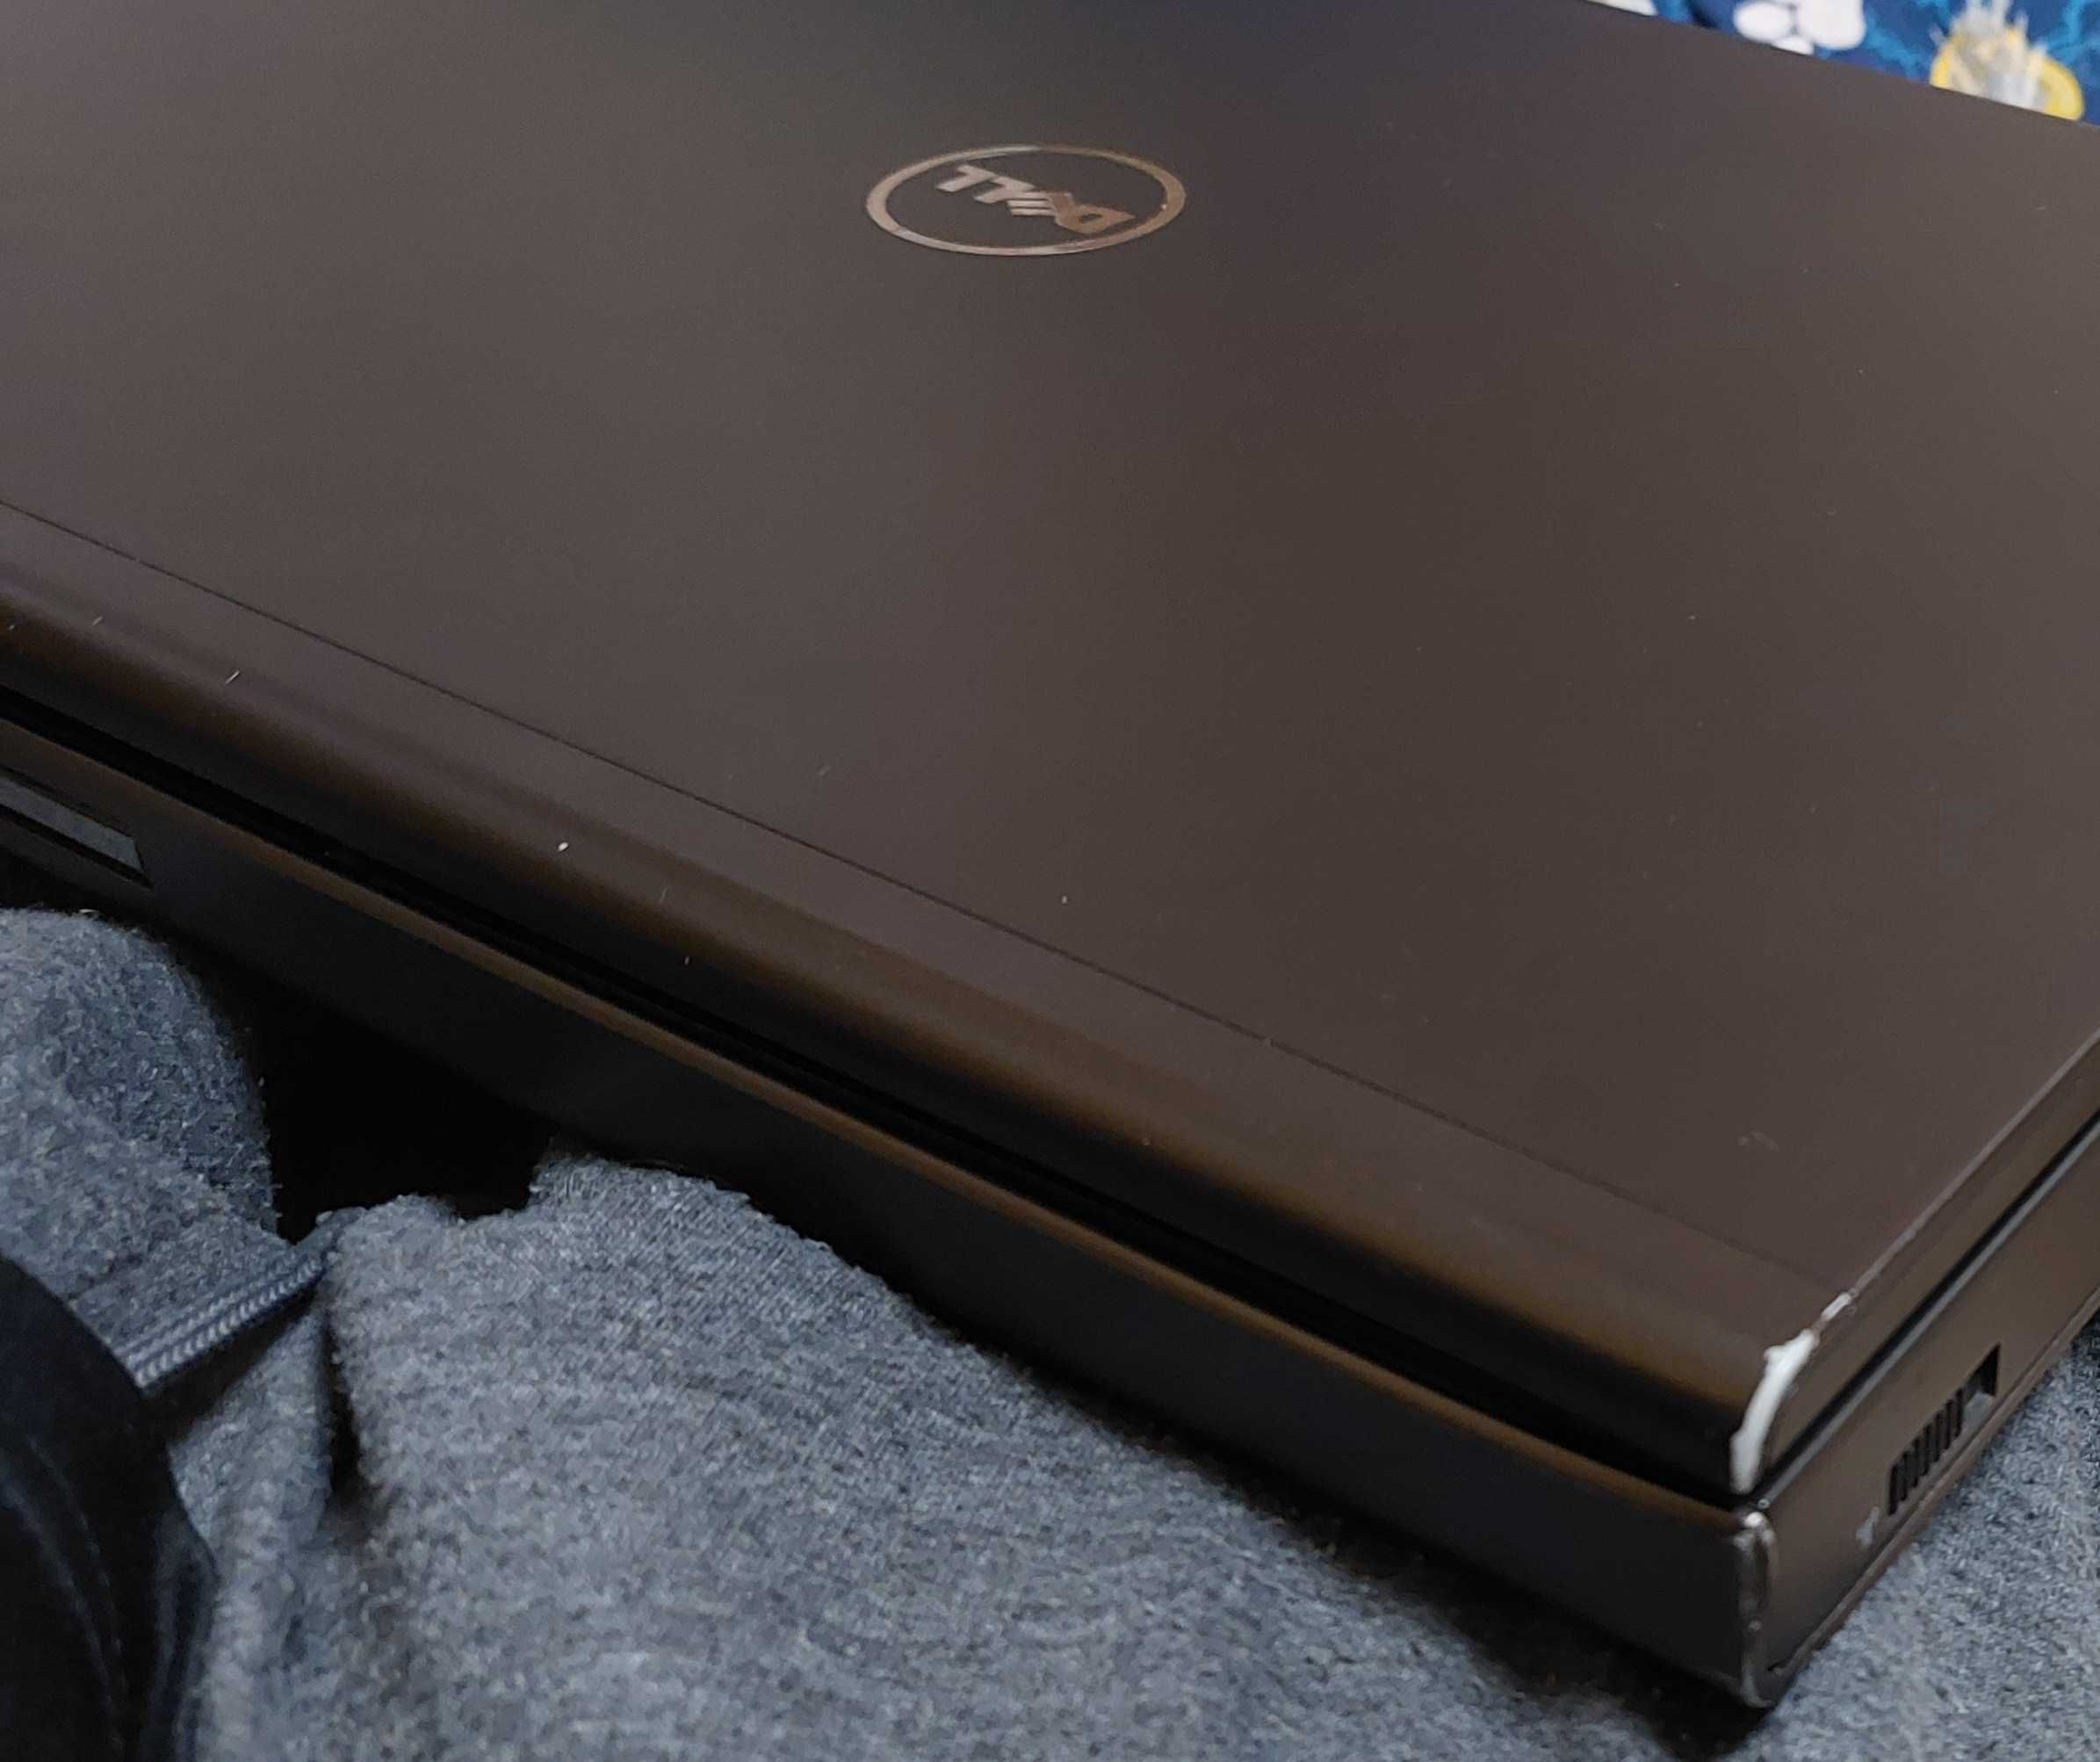 Dell M6600 laptop/stacja robocza i7 2720QM 16 GB
+ nVidia Quadro 3000M